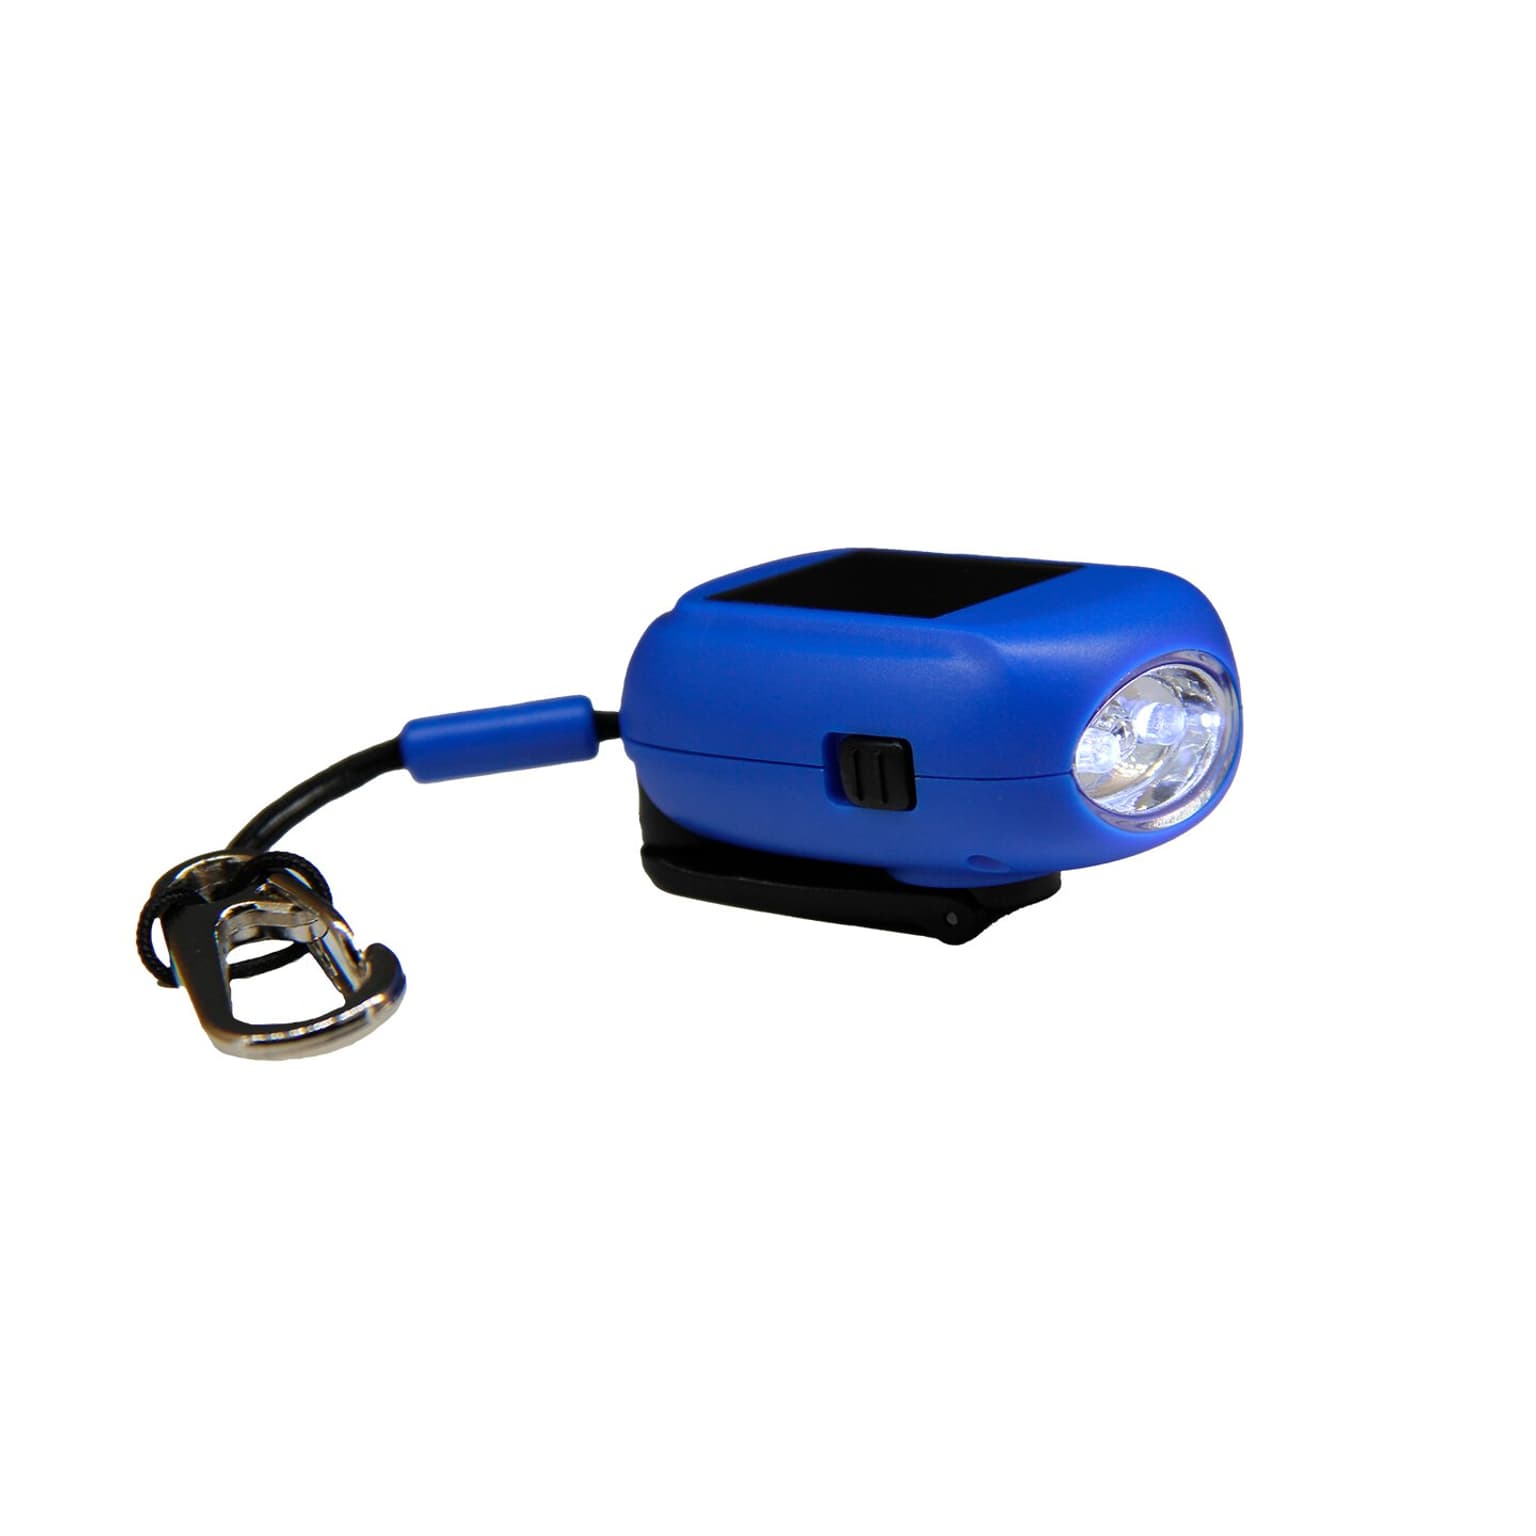 Essential Elements Essential Elements Mini-lampe de poche rec.  mousqueton Lampe de poche bleu 1